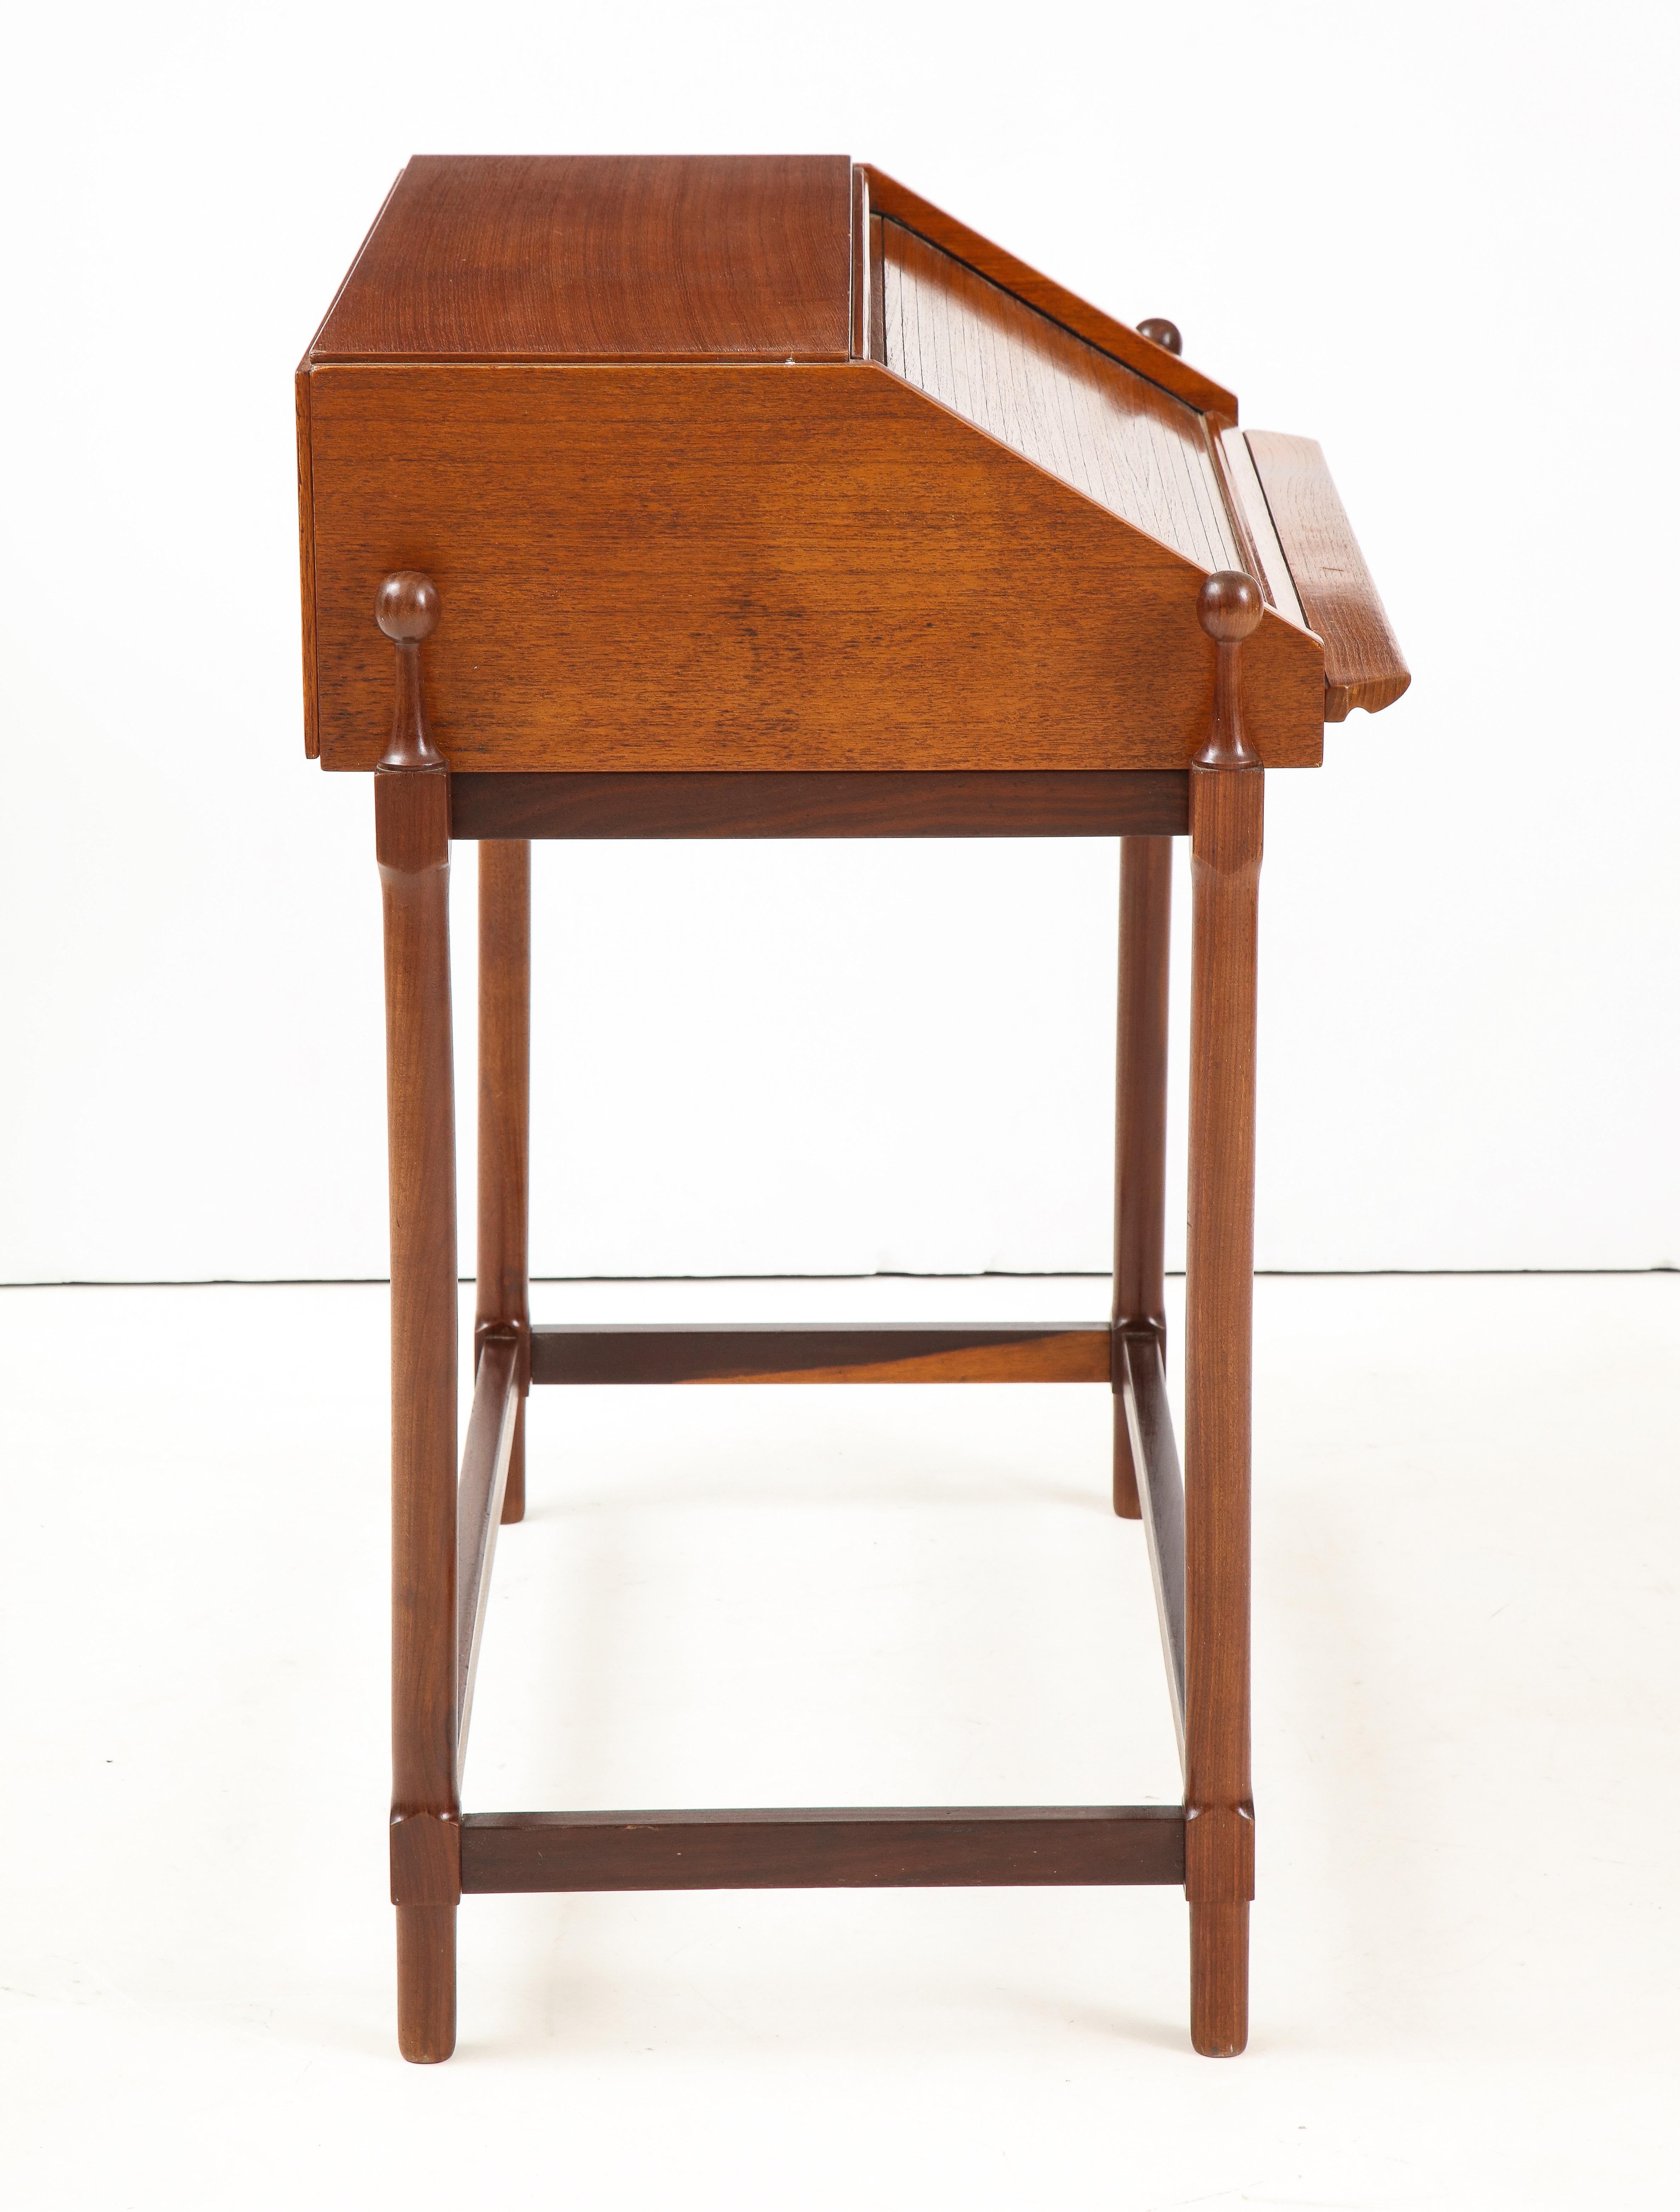 Mid-20th Century Modernist Teak Rollup Secretary Desk by Fratelli Proserpio, Italy, 1960s For Sale